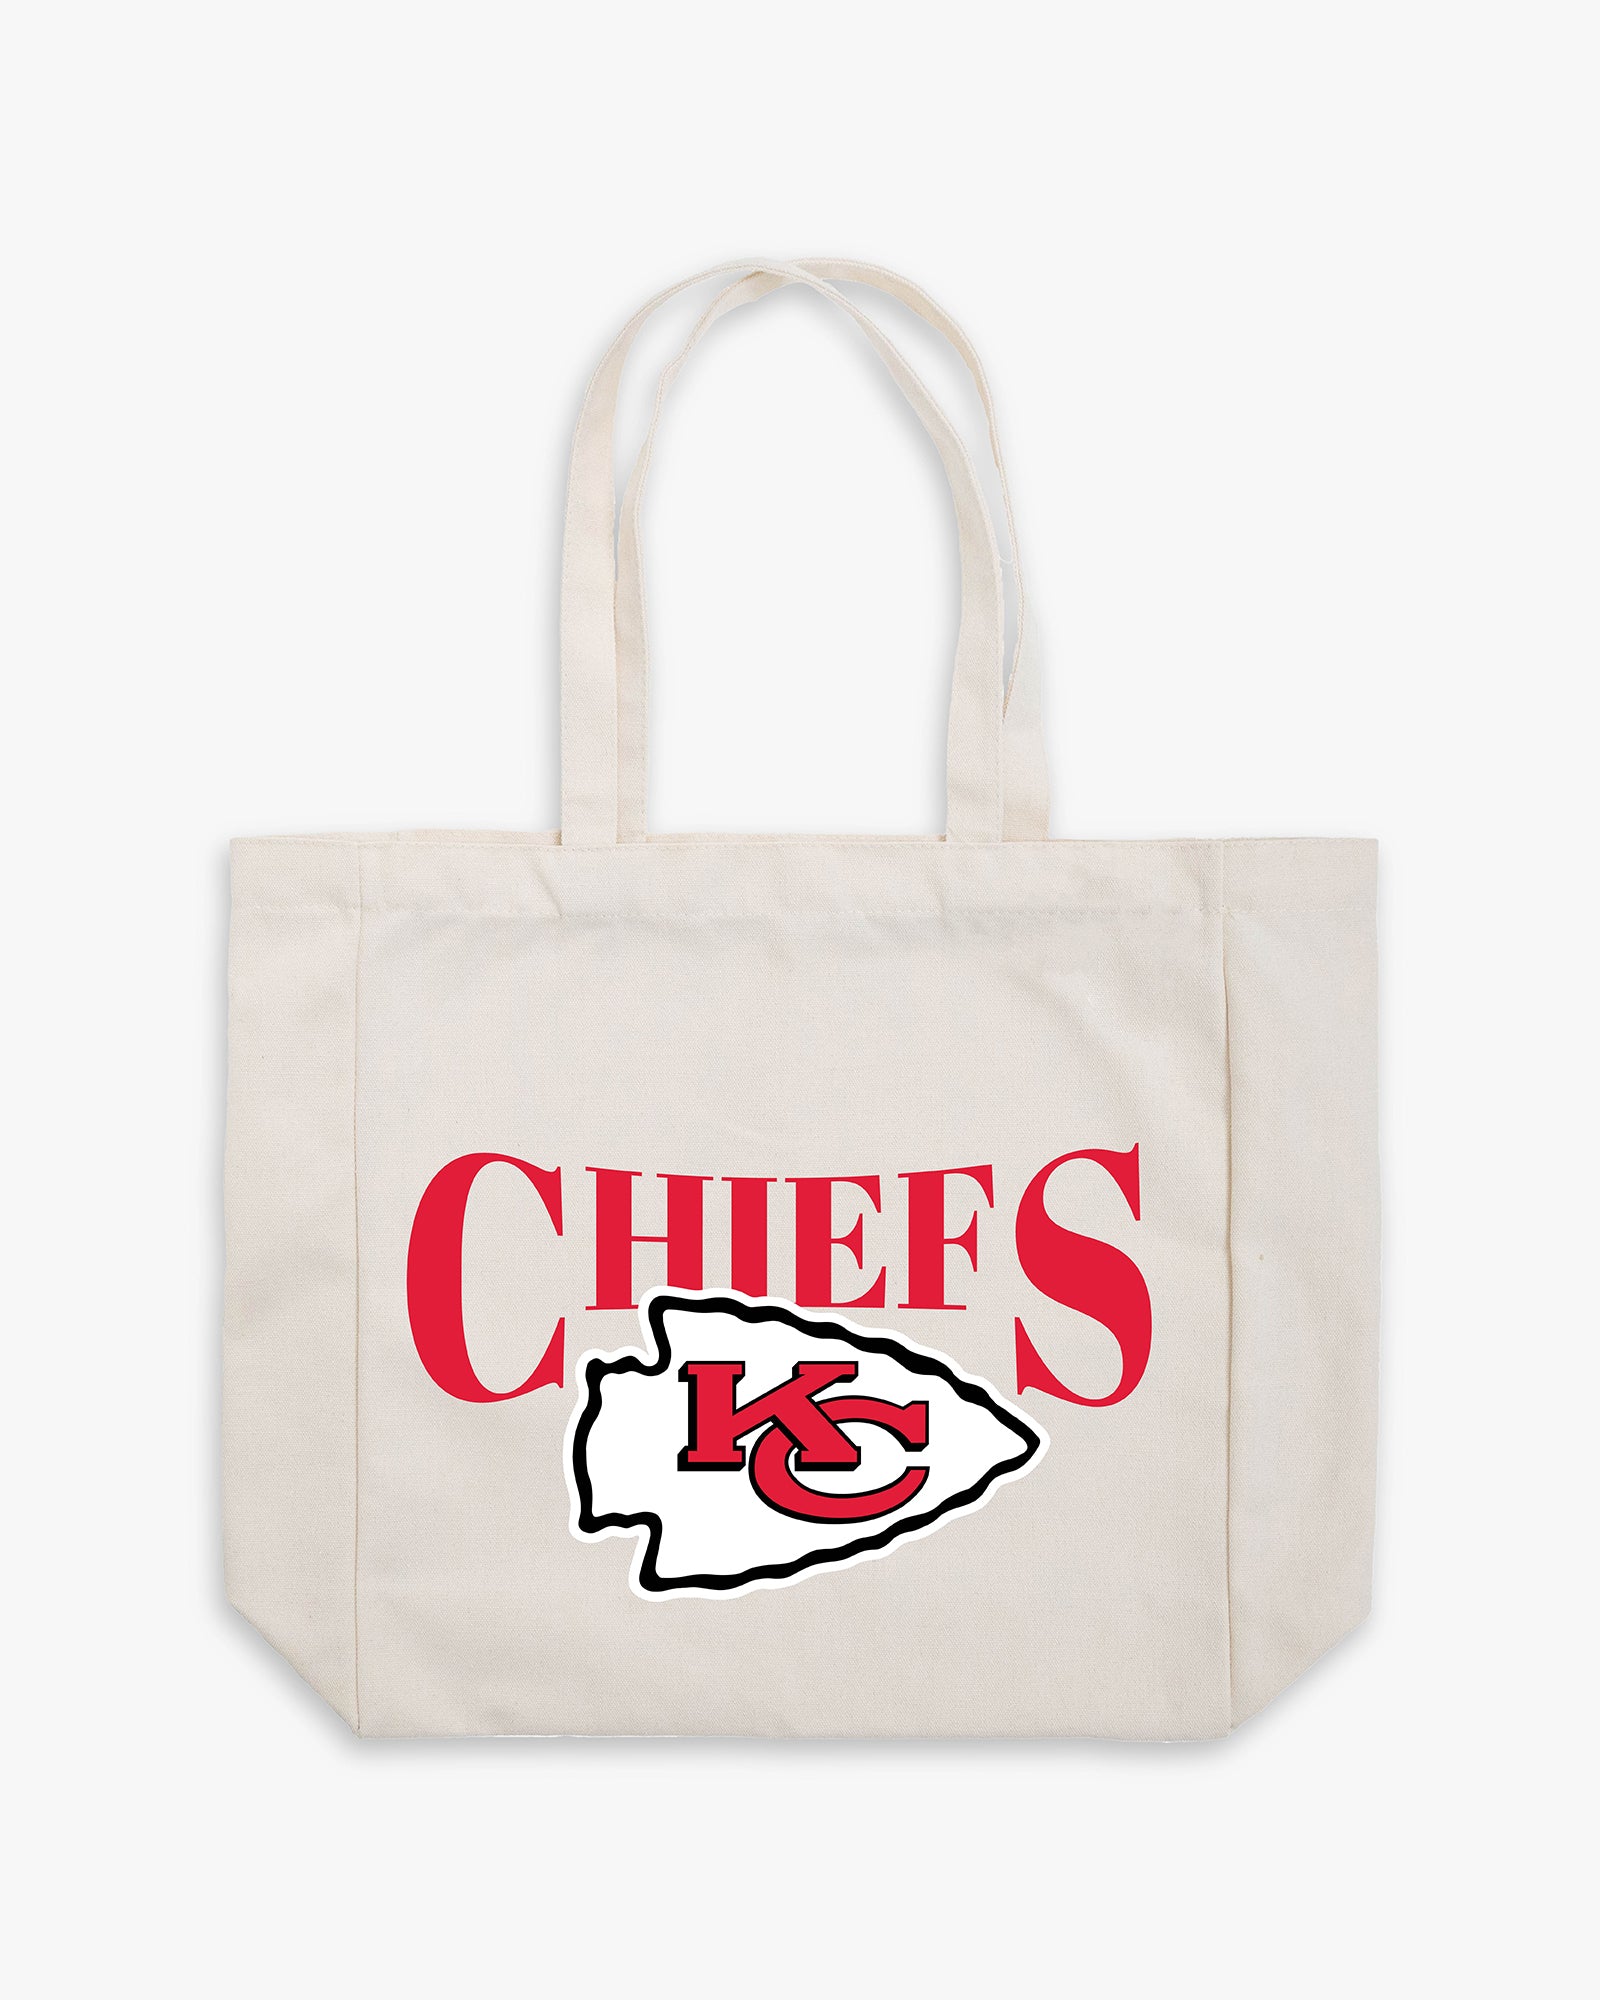 Kansas City Chiefs NFL Canvas Tote Bag